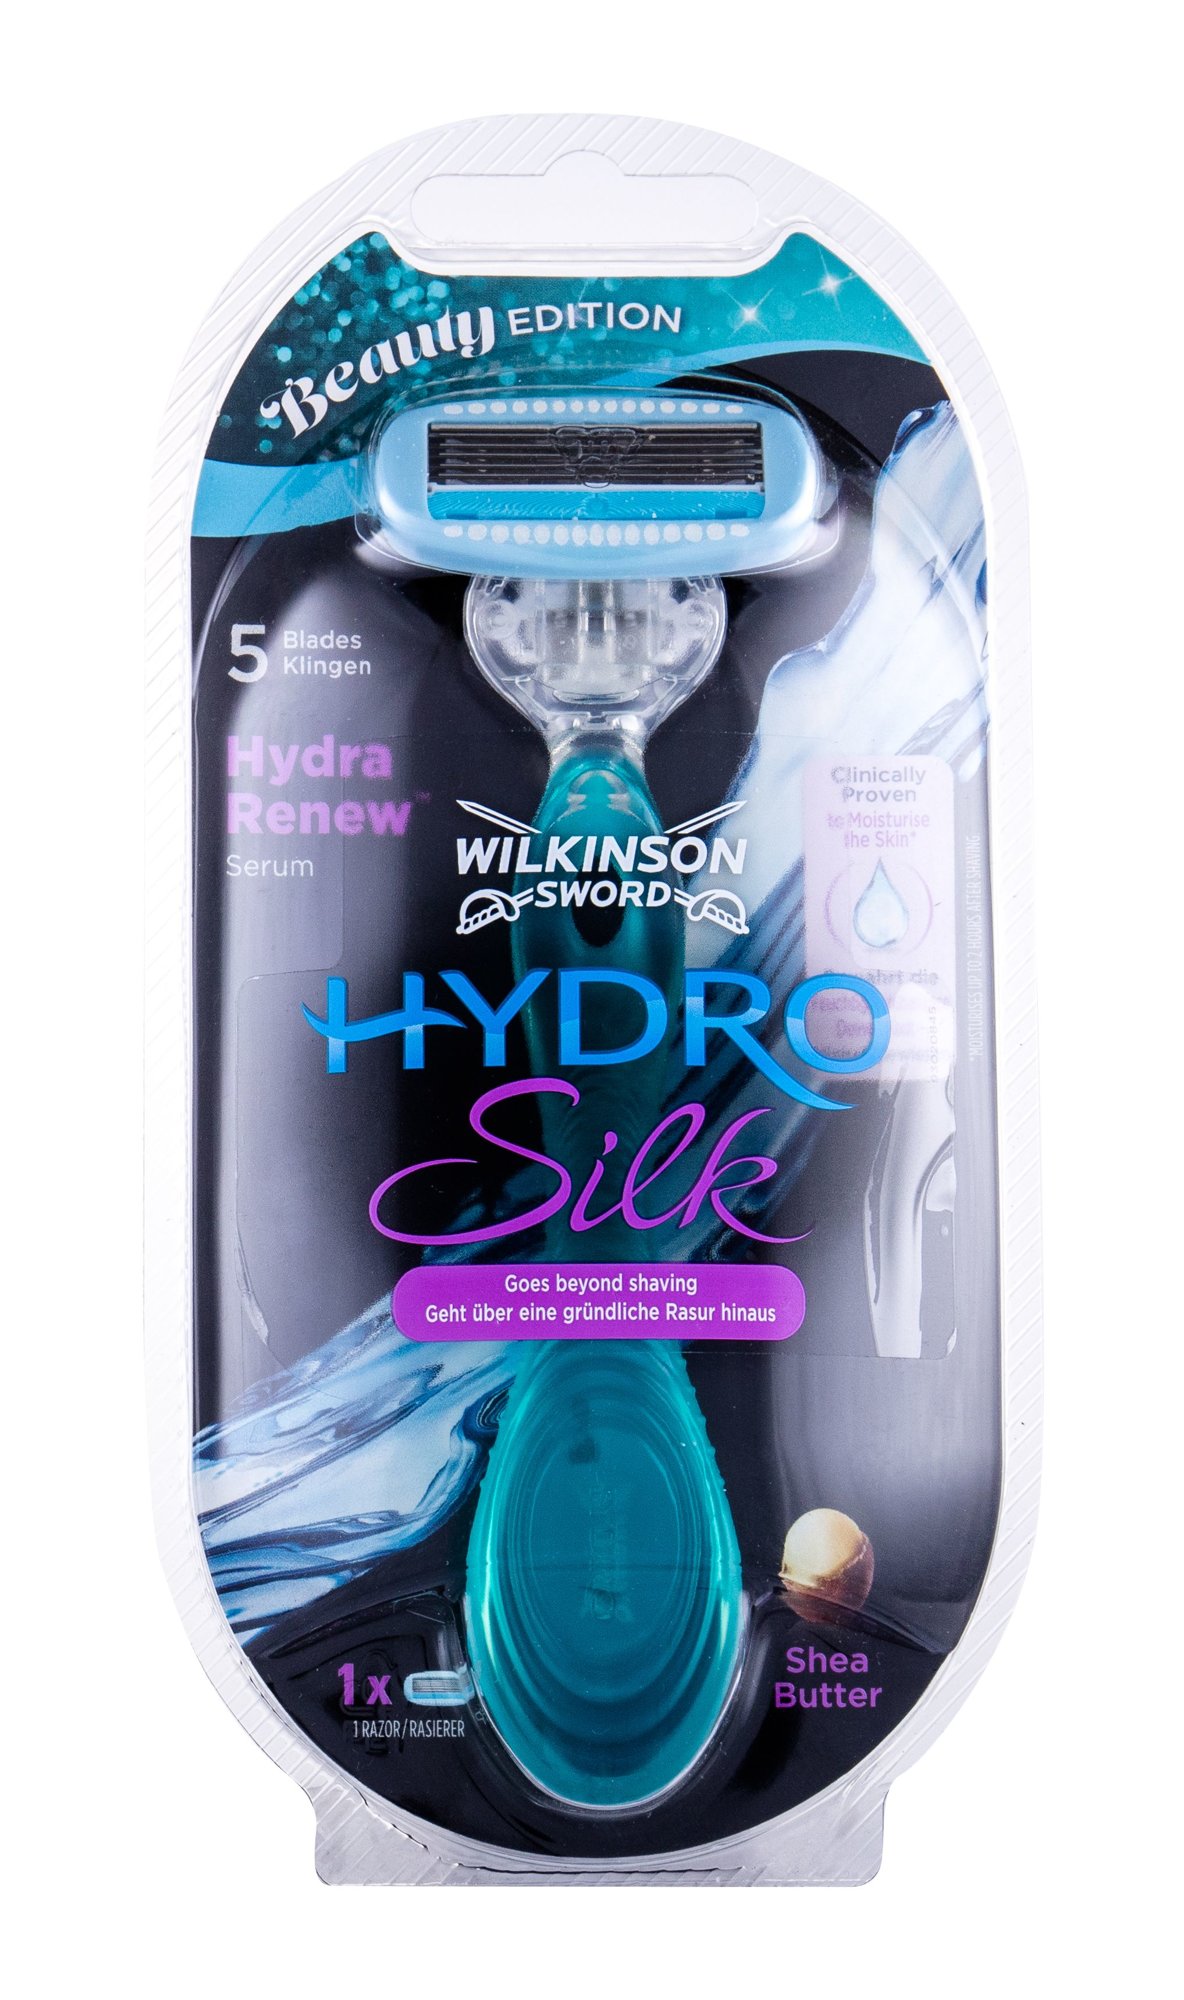 Wilkinson Sword Hydro Silk skustuvas